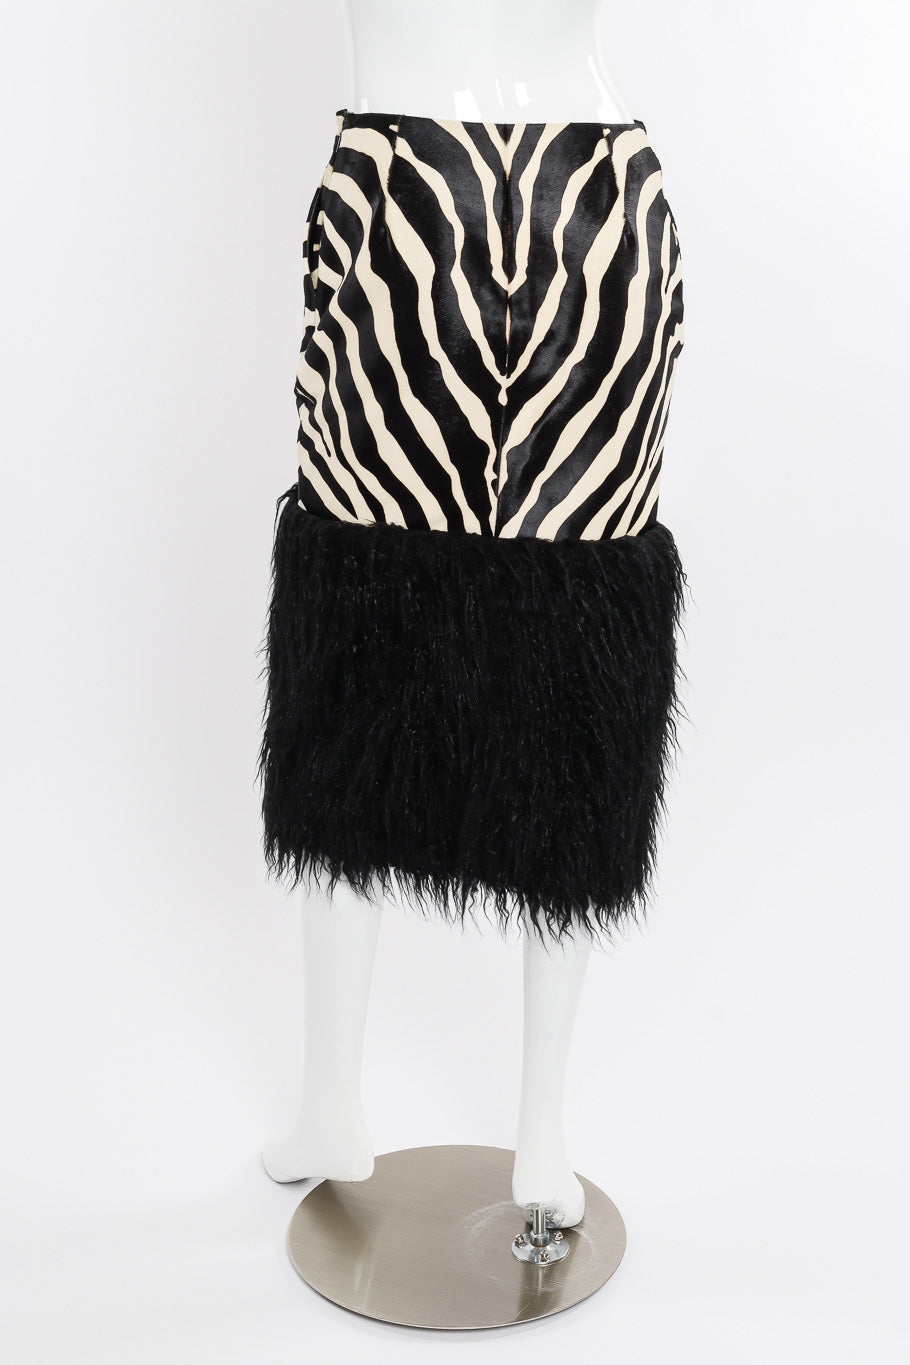 Saint Laurent 2019 F/W Zebra Print Midi Skirt back view on mannequin @Recessla